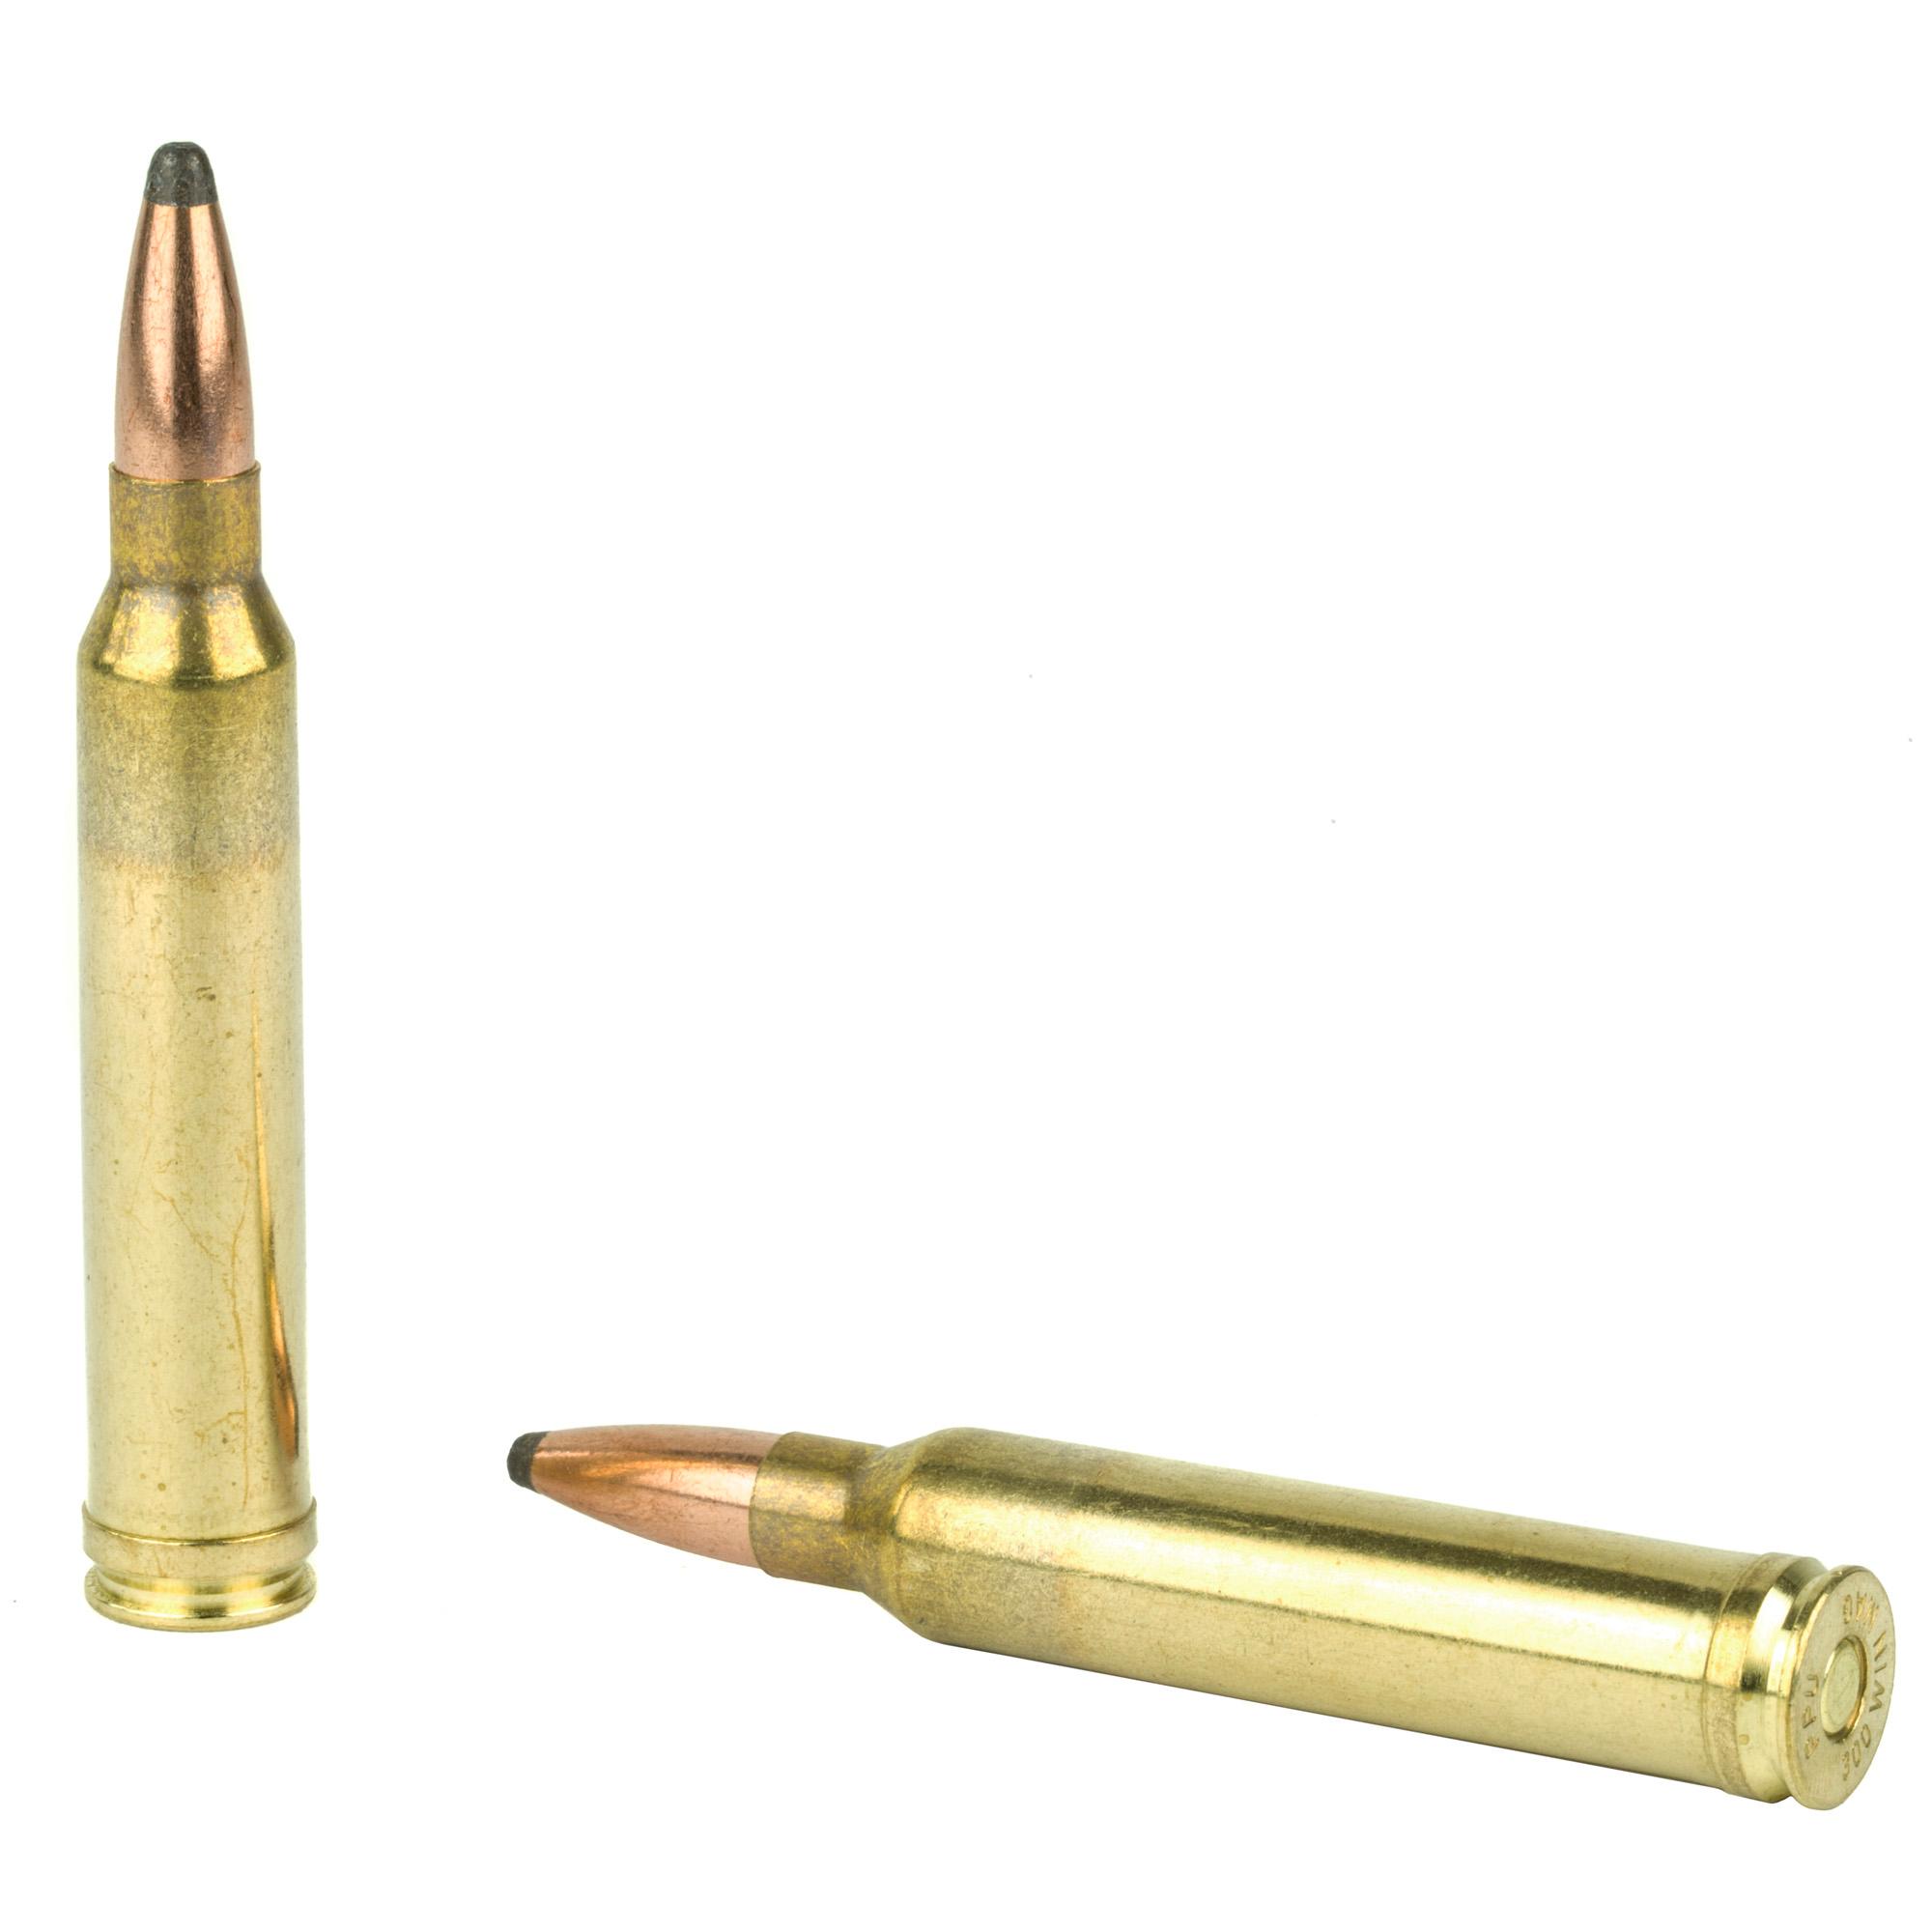 Rifle Ammunition PPU 300WIN MAG SP 150GR 20/200 image 4